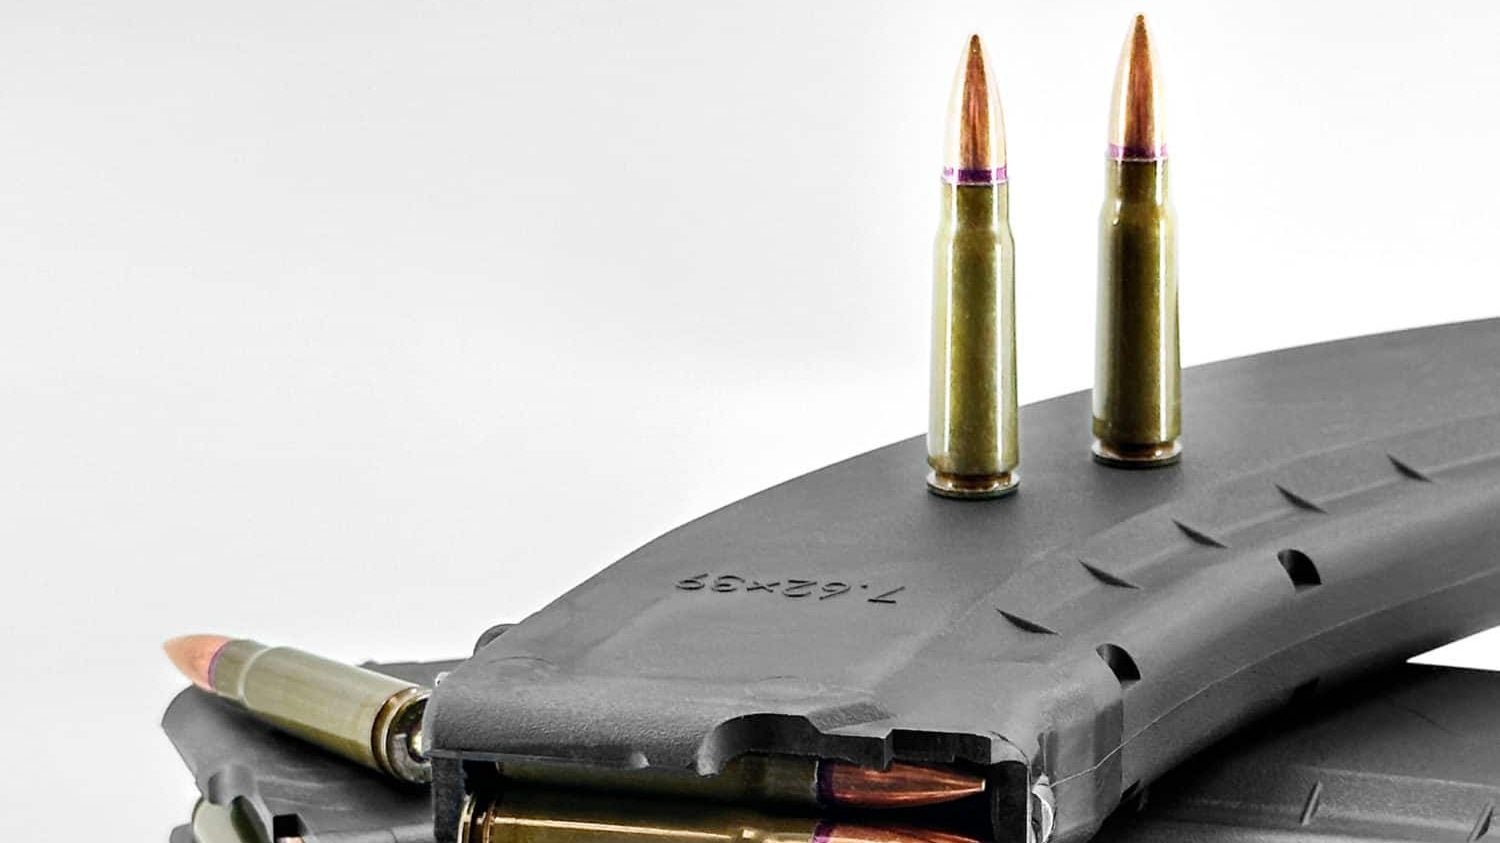 Kalashnikov USA Debuts Their New 124 grain 7.62x39mm Ammunition